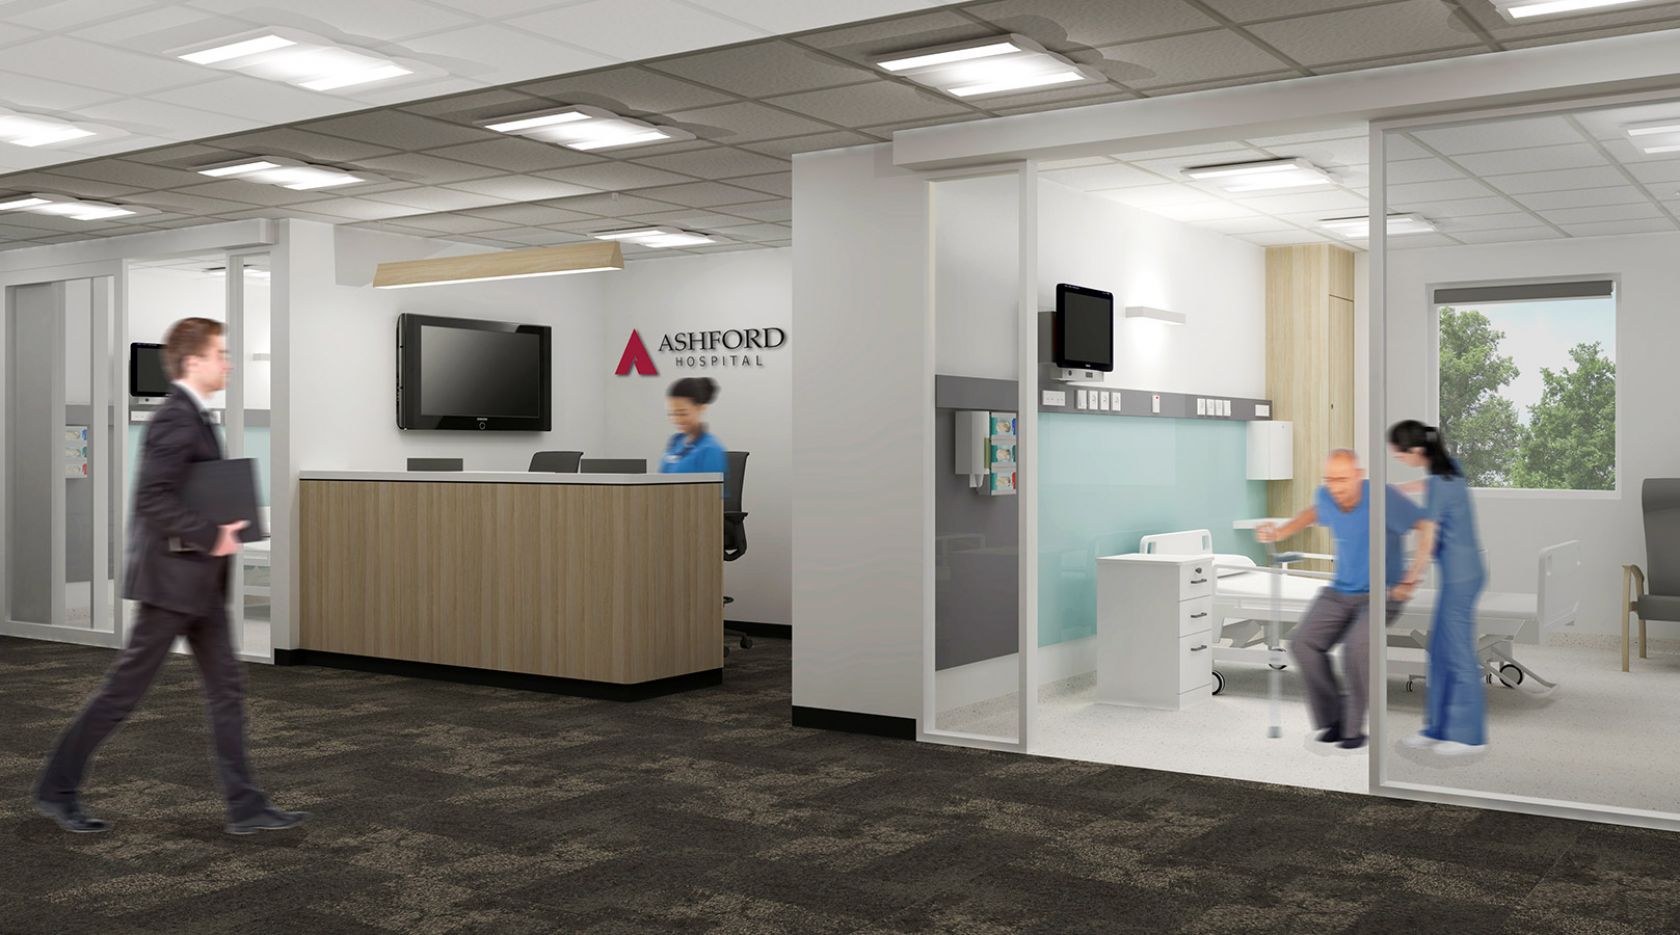 schiavello upgrade ashford hospital reception desk render image